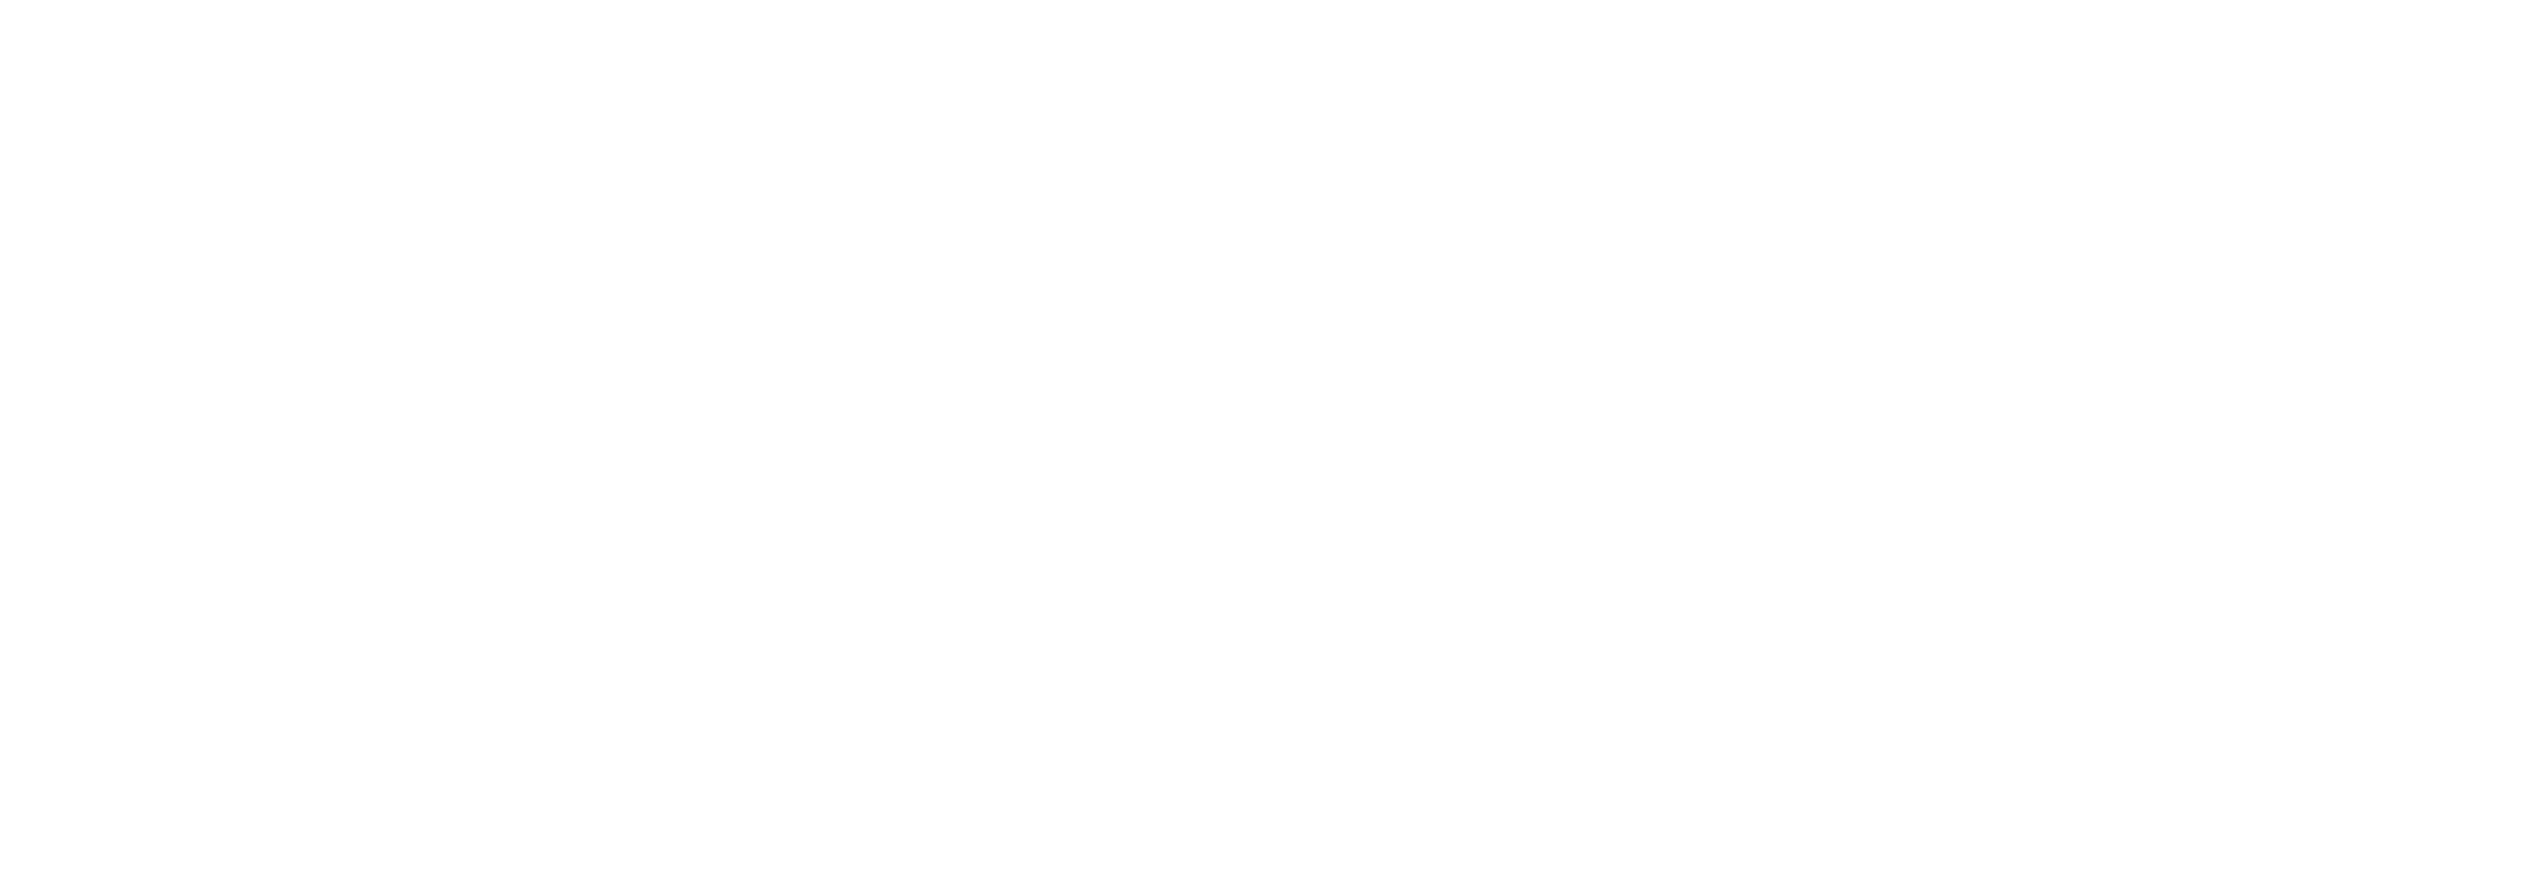 Instituto Dom Bosco